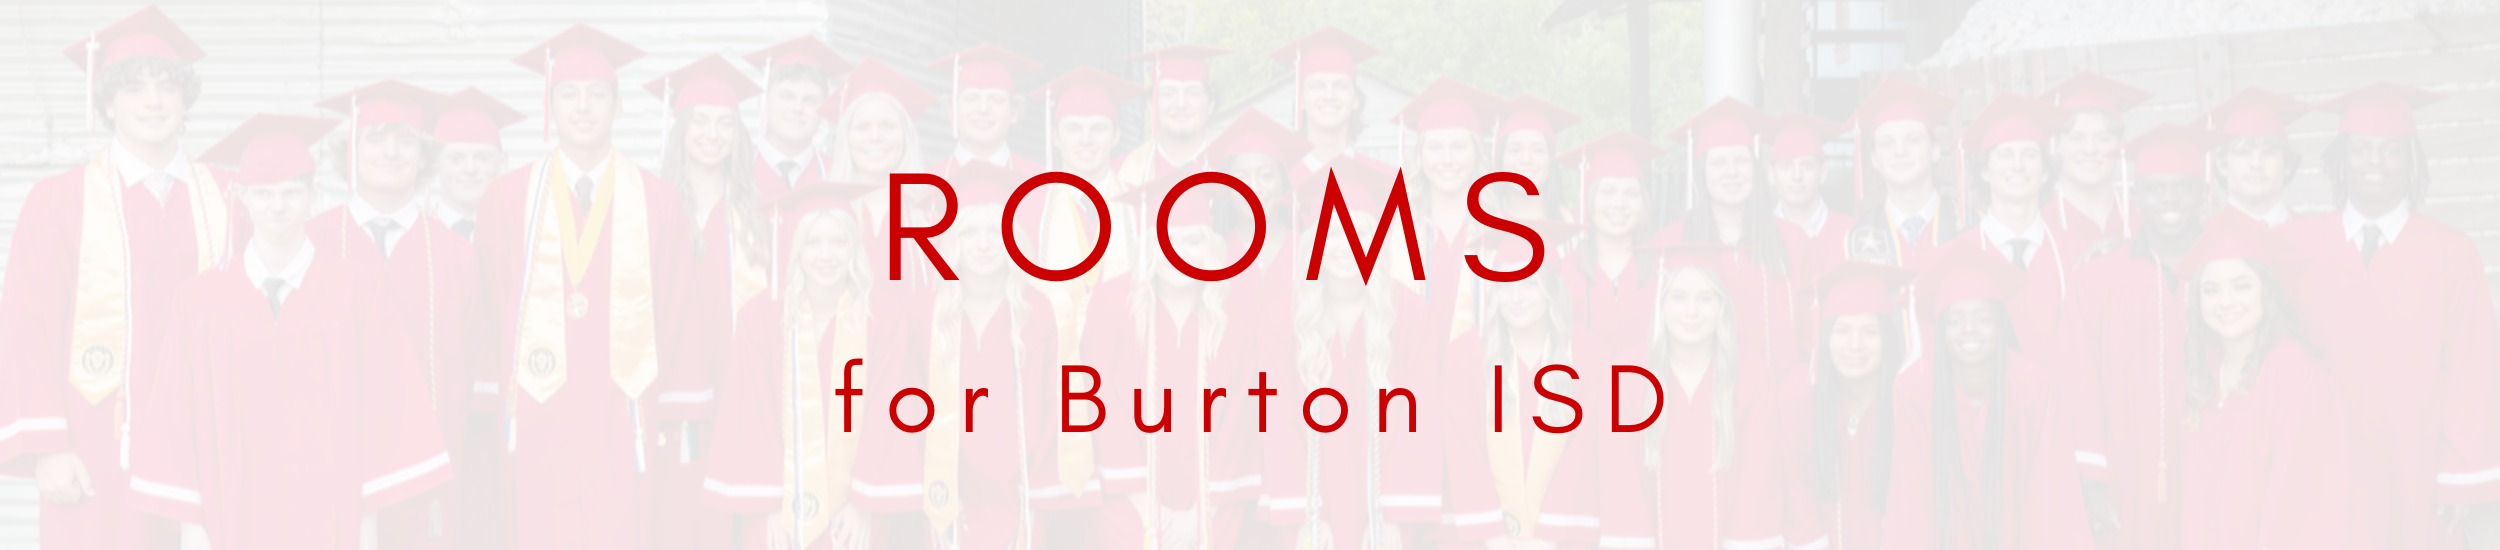 Rooms for Burton ISD